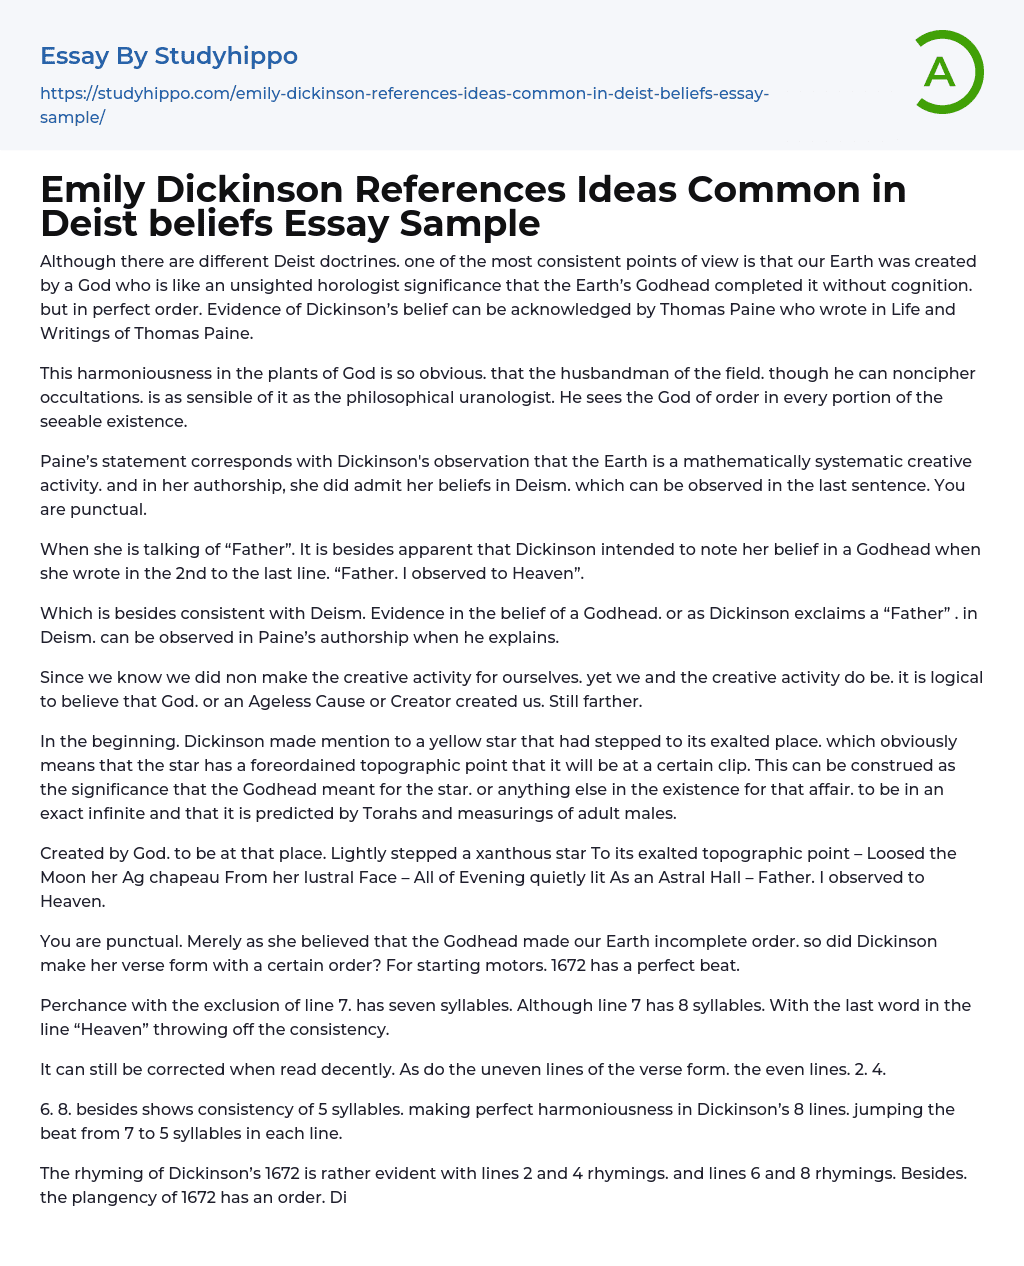 Emily Dickinson References Ideas Common in Deist beliefs Essay Sample